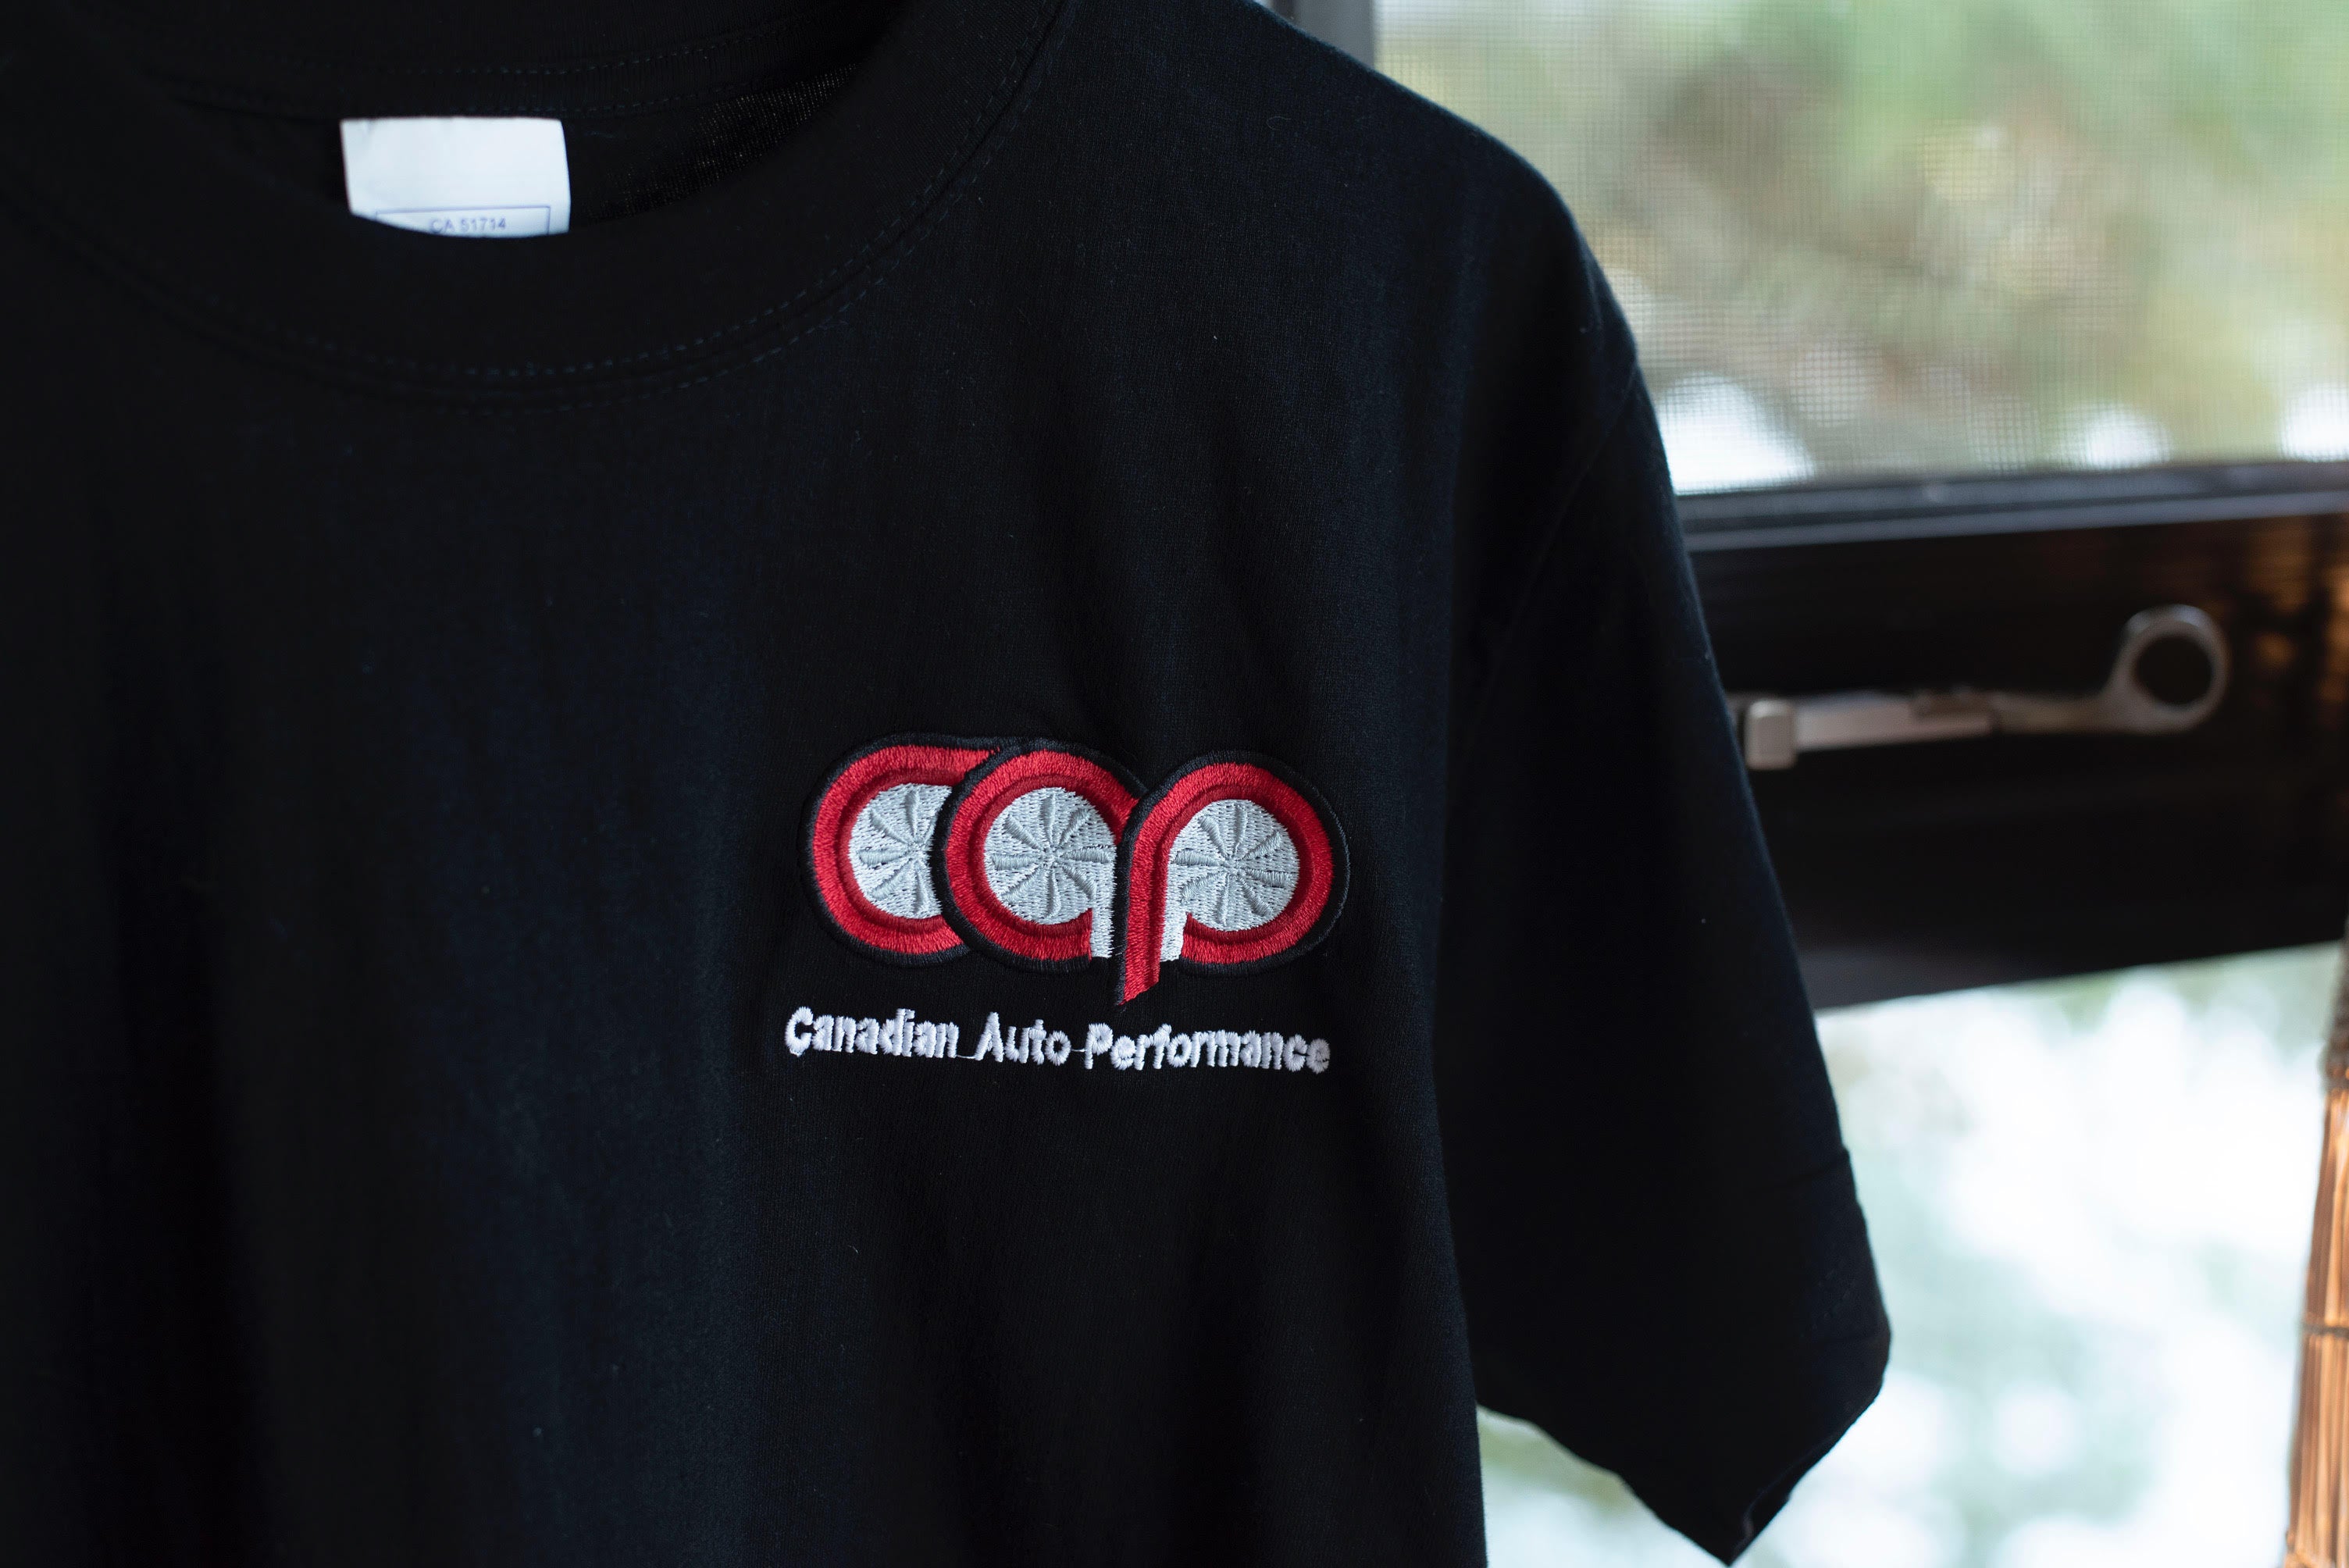 Canadian Auto Performance T-Shirt